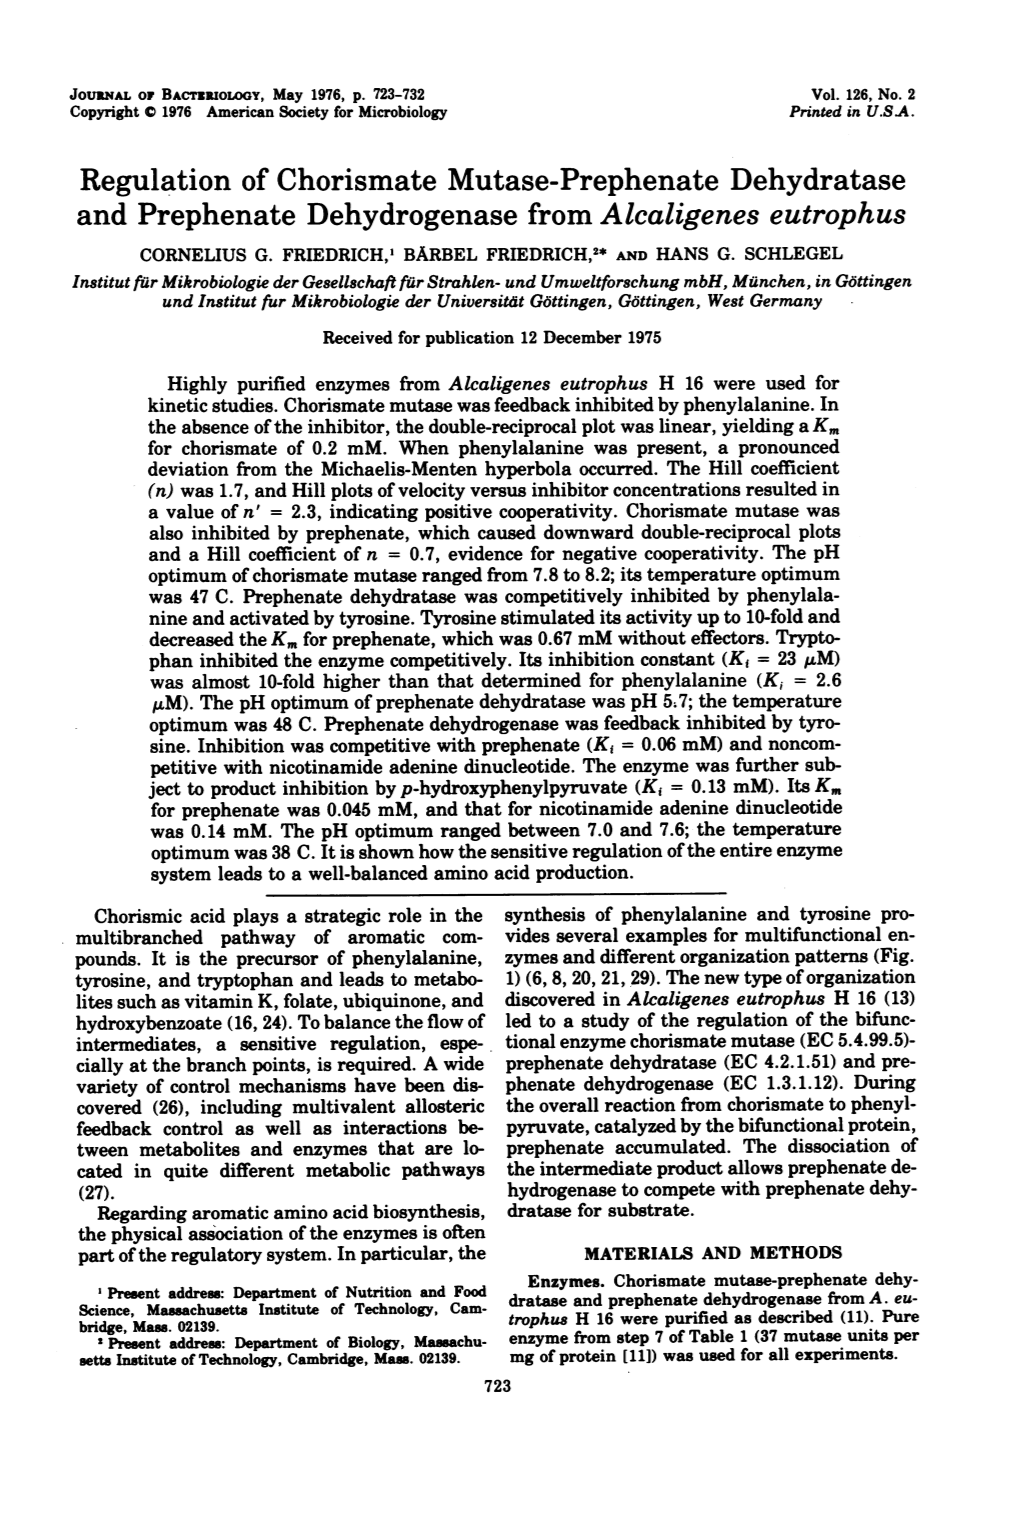 Regulation of Chorismate Mutase-Prephenate Dehydratase and Prephenate Dehydrogenase from Alcaligenes Eutrophus CORNELIUS G